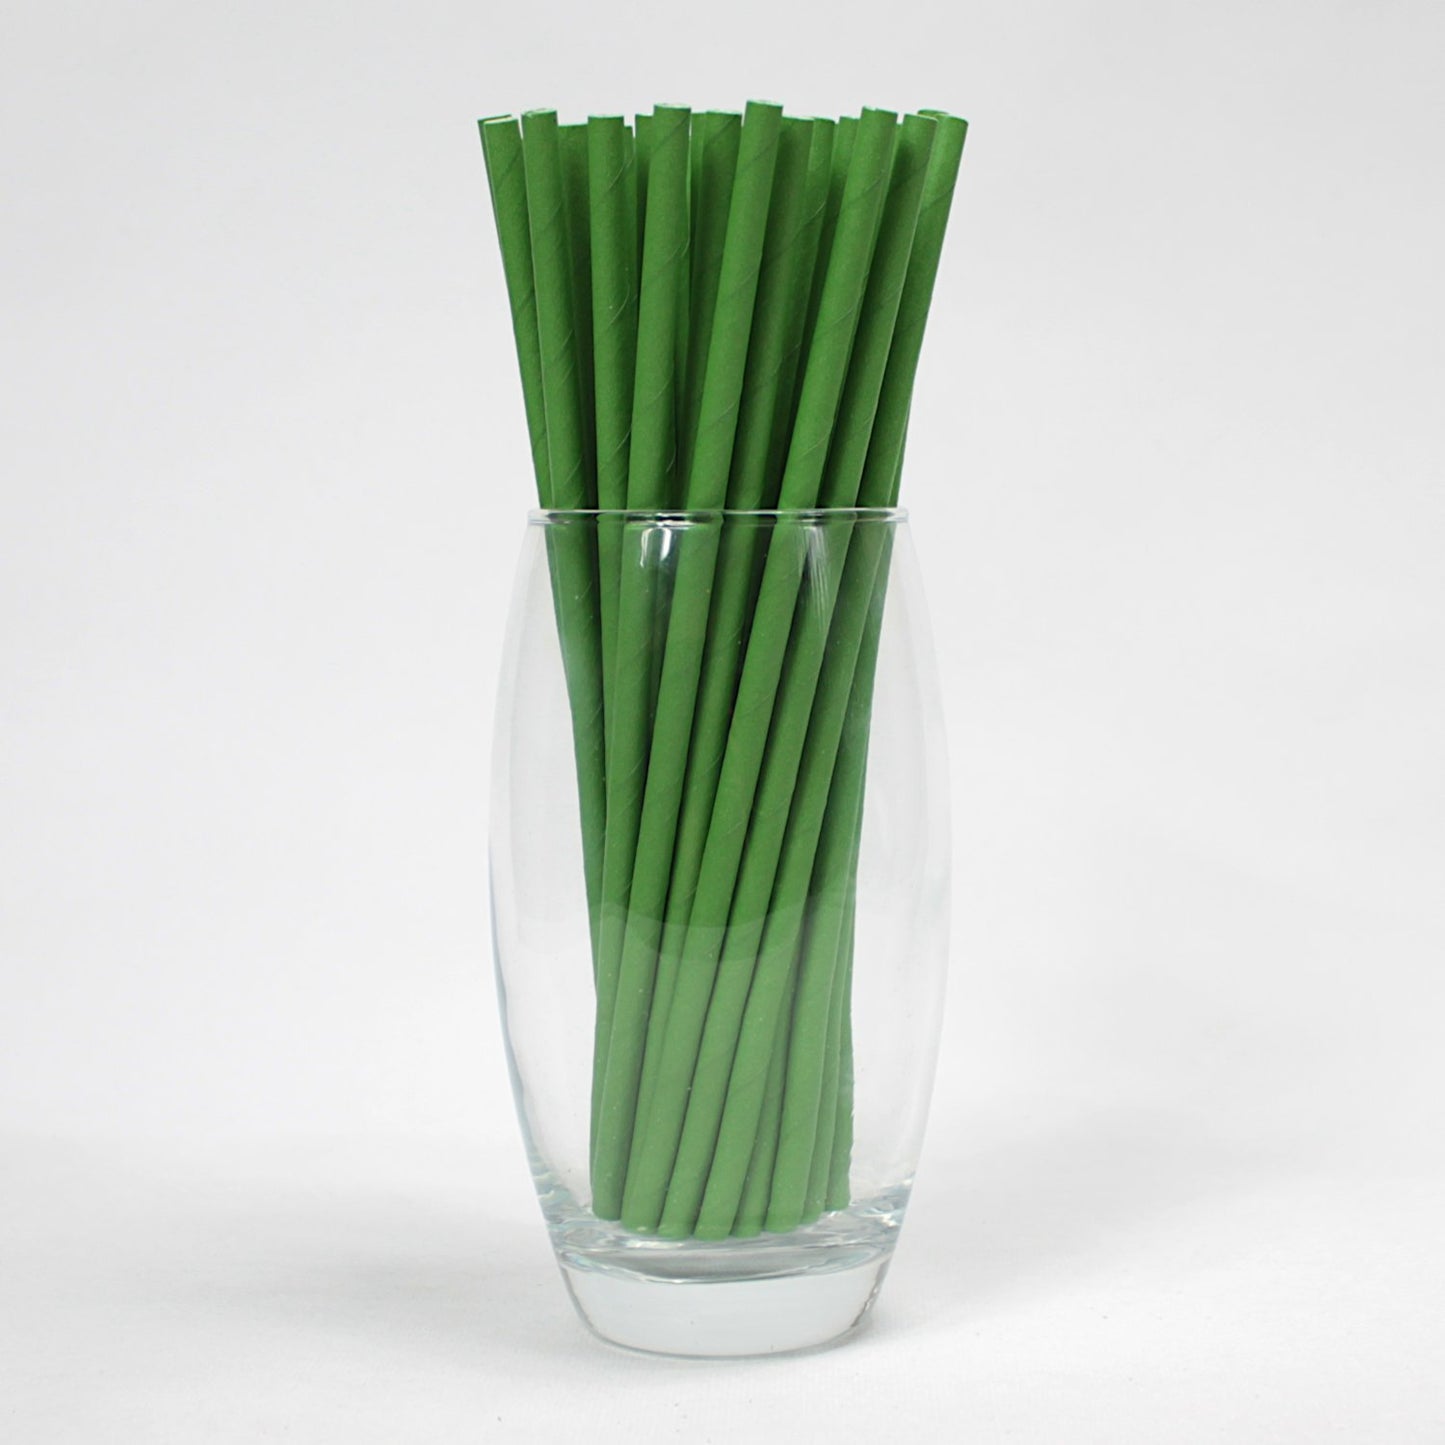 Green Paper Straws (6mm x 200mm) - Quality Drinking Straws - Intrinsic Paper Straws